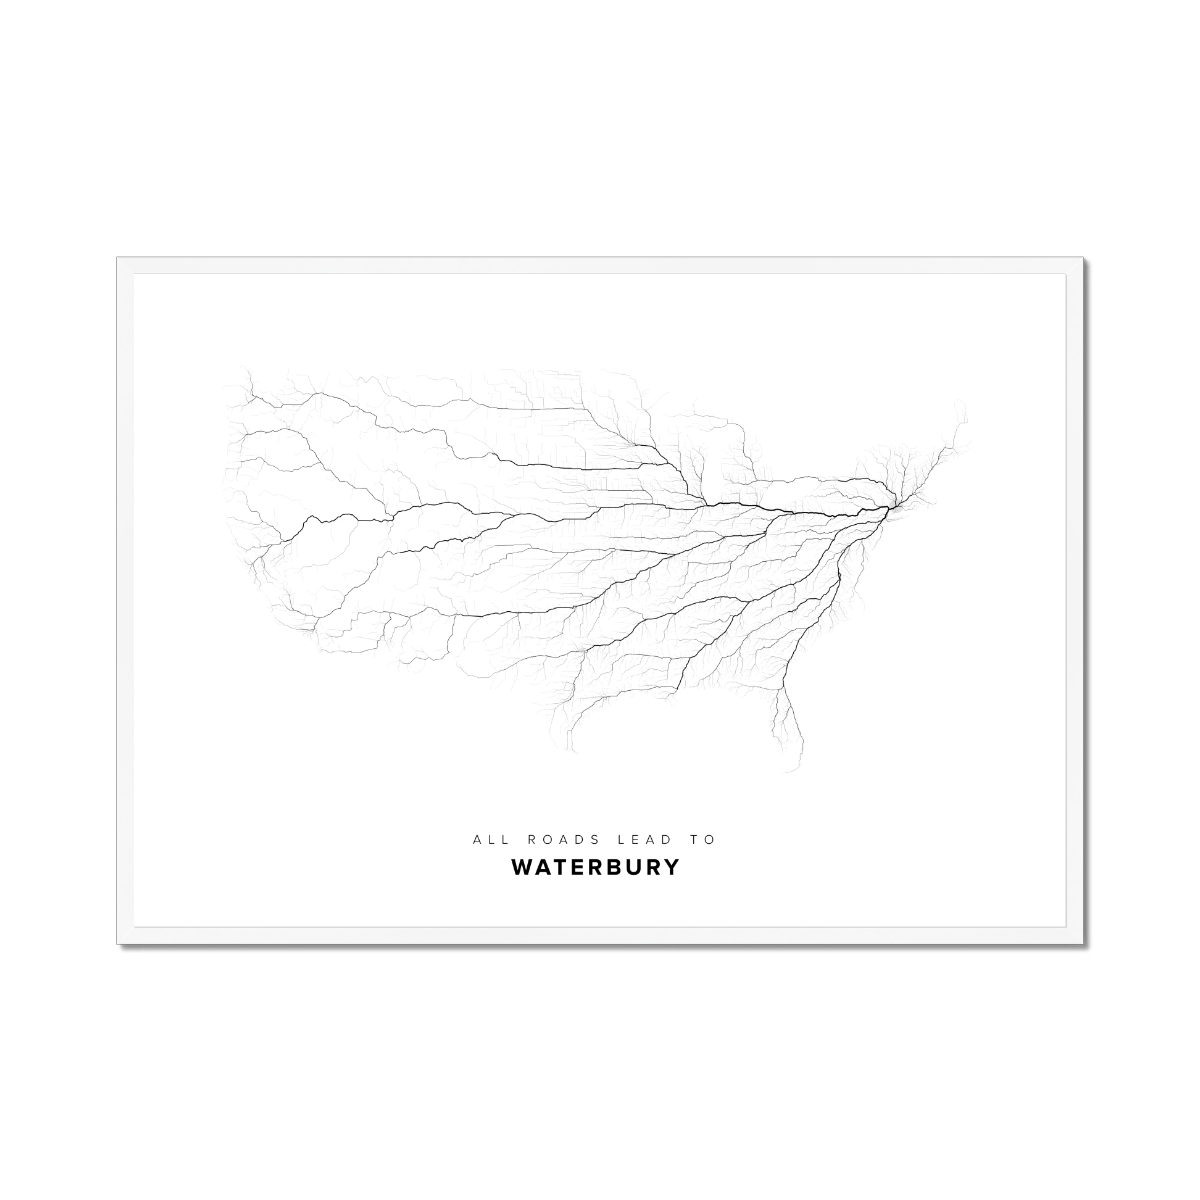 All roads lead to Waterbury (United States of America) Fine Art Map Print